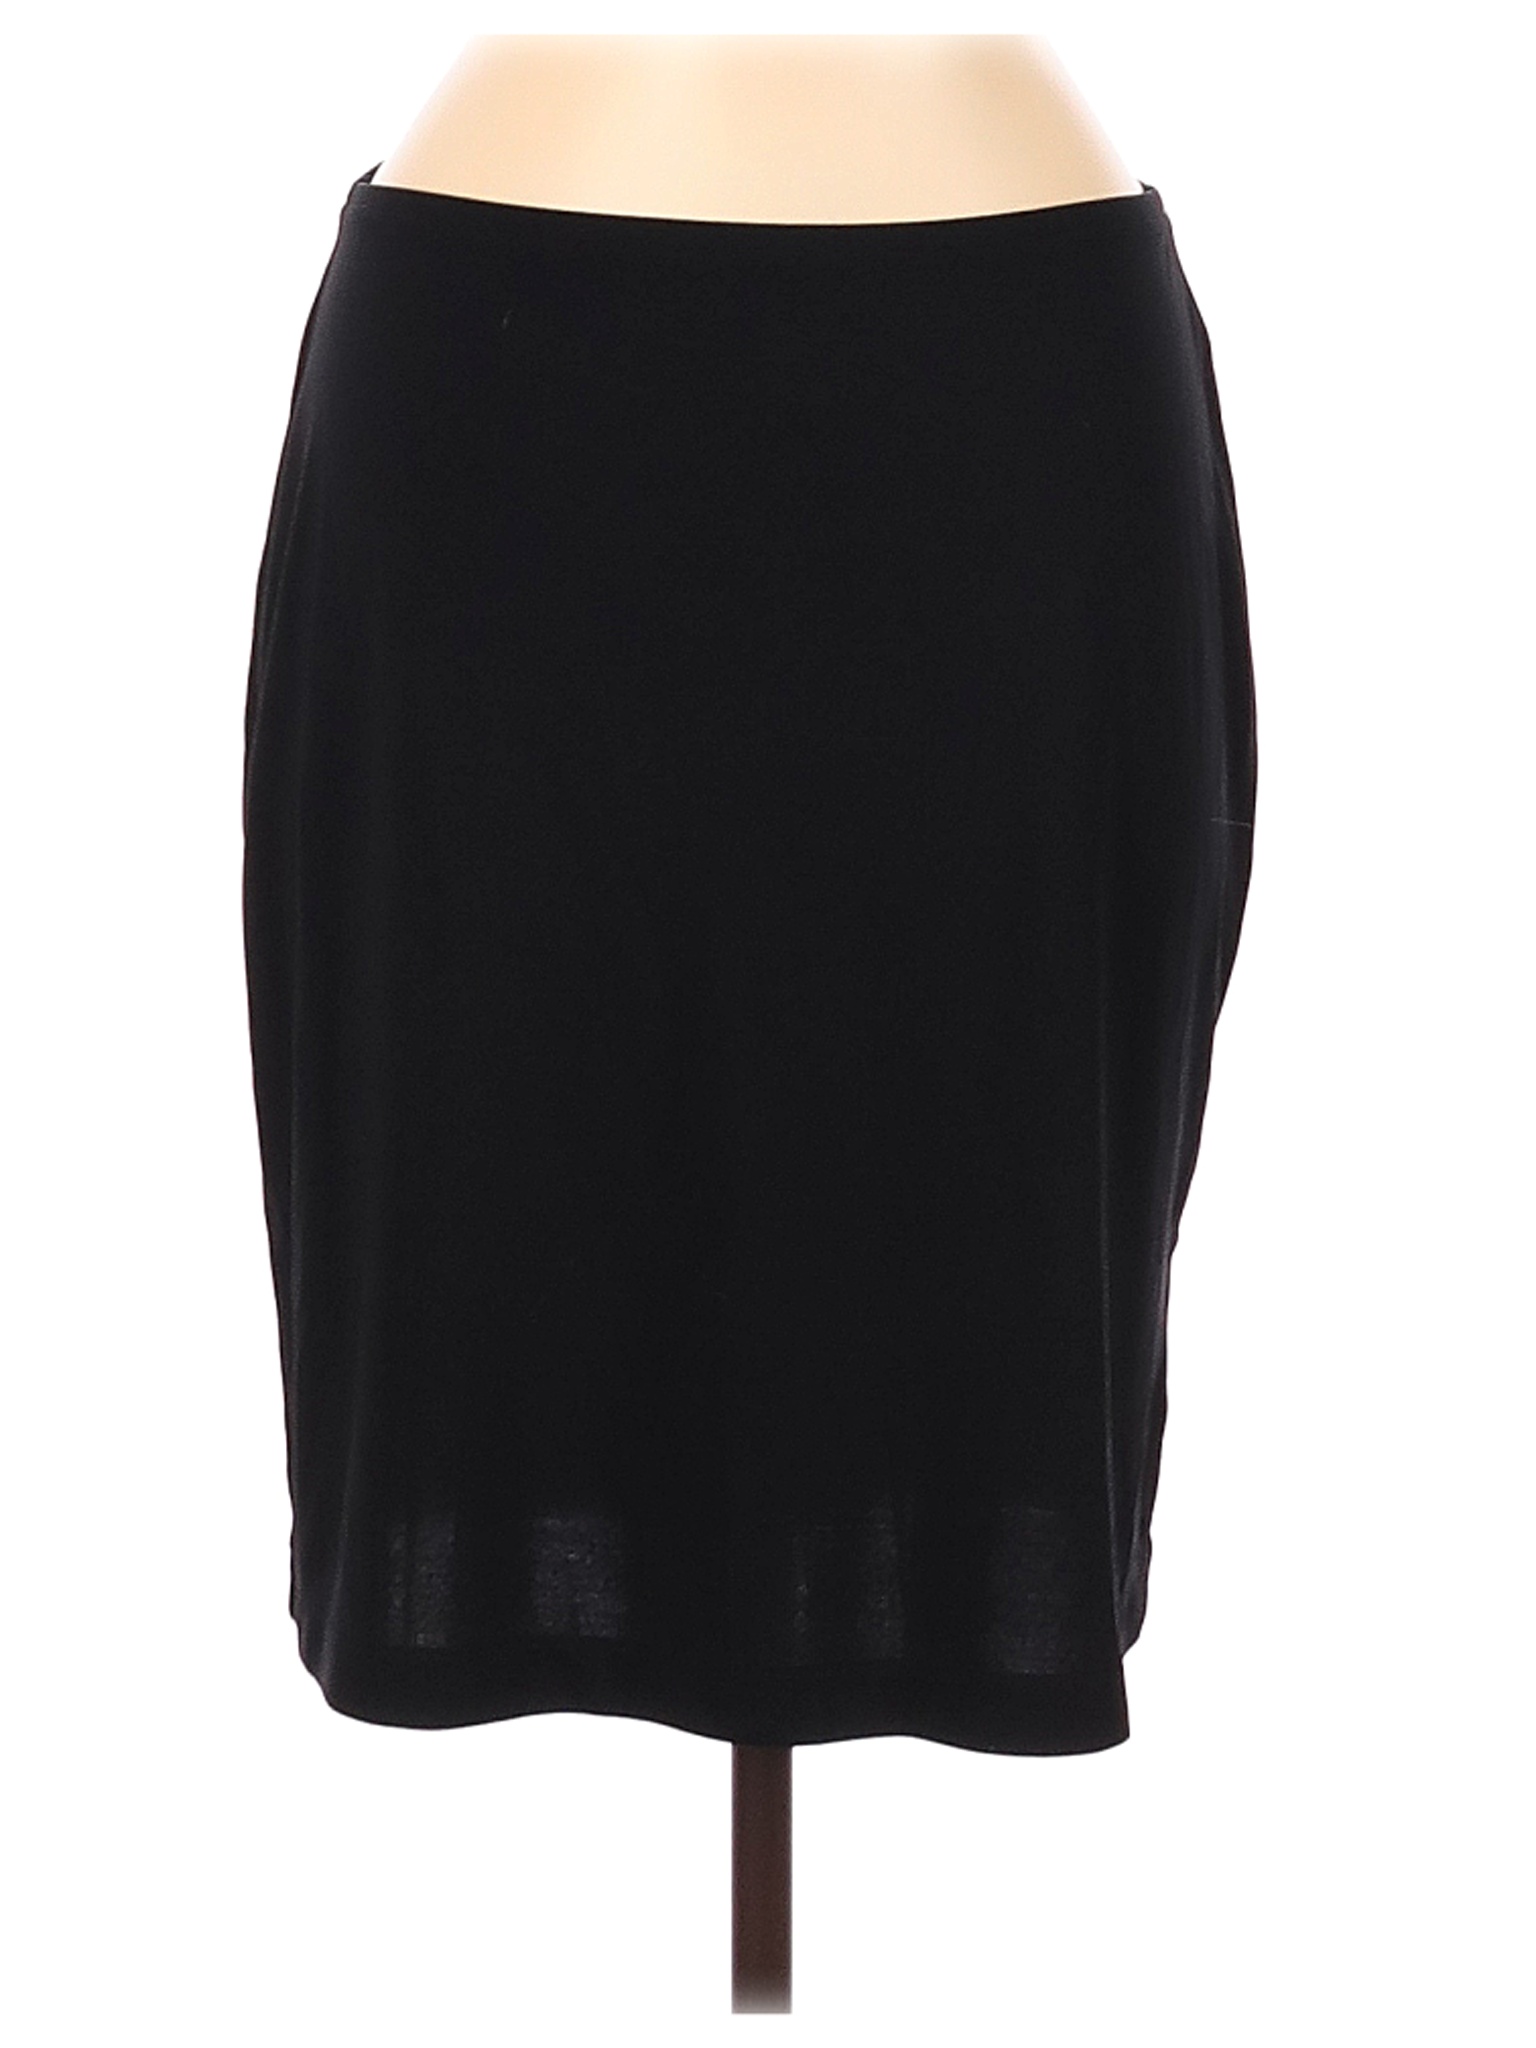 Merona Women Black Casual Skirt M | eBay